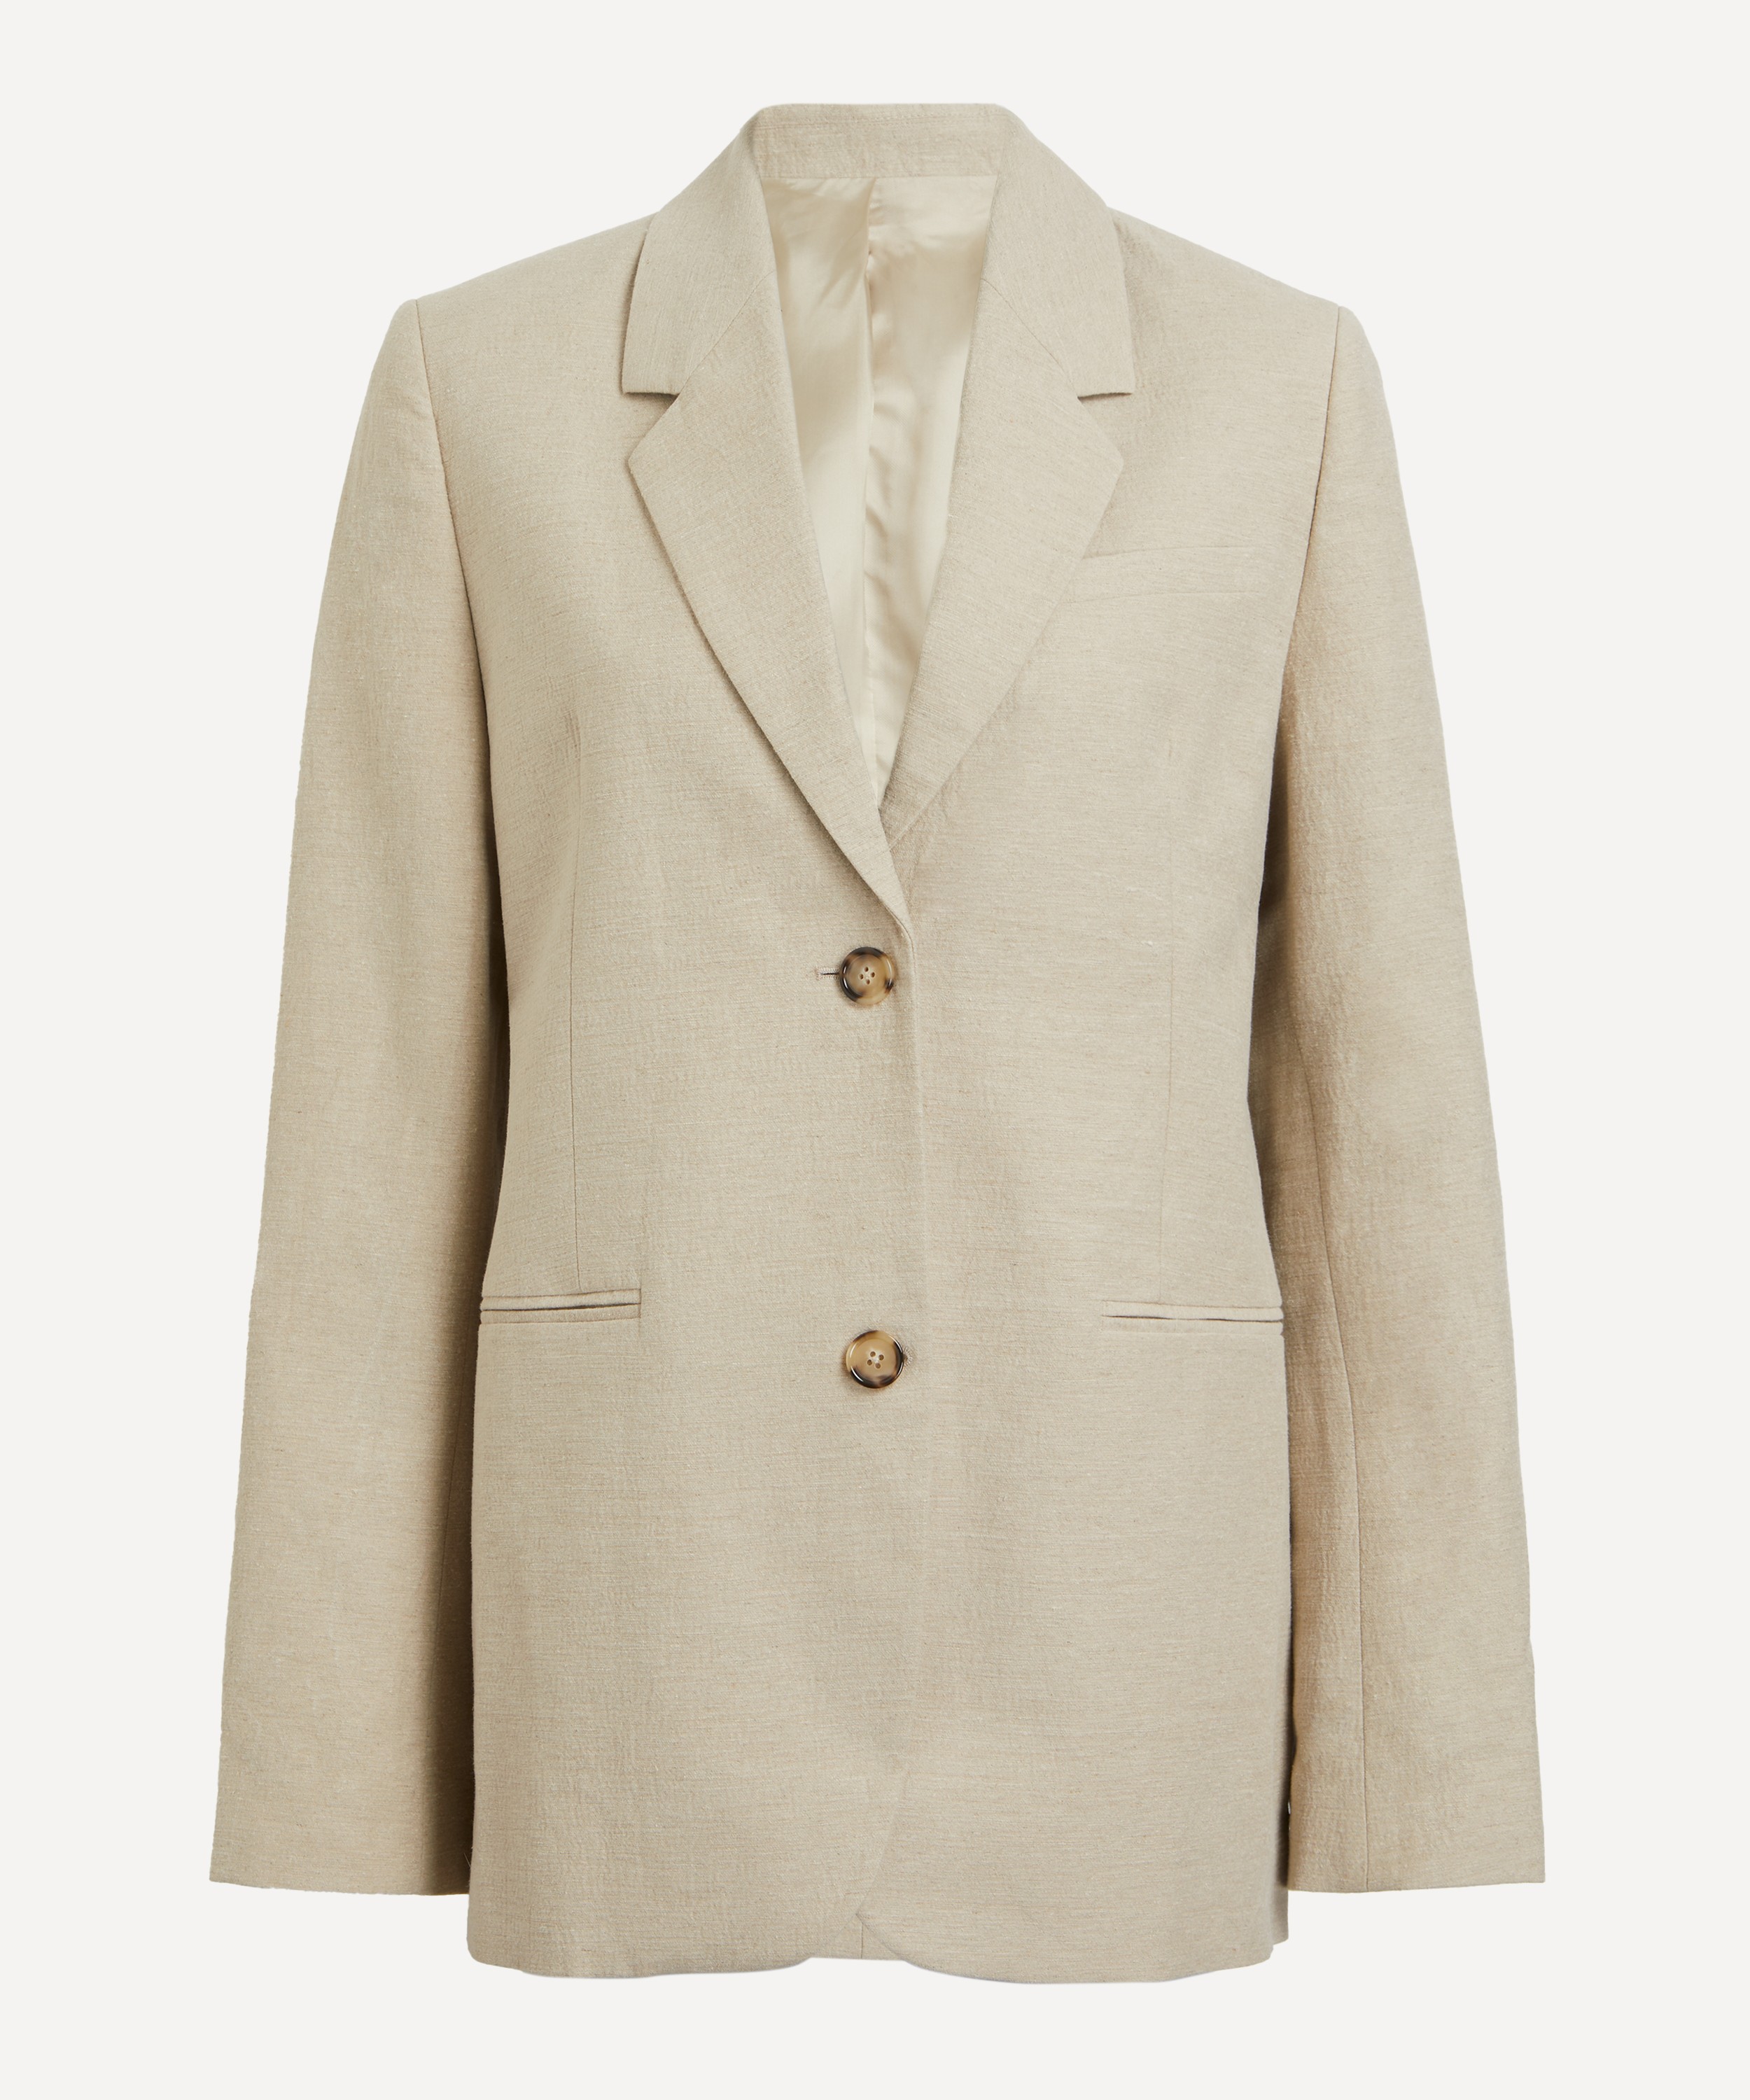 Toteme - Linen Tailored Suit Jacket